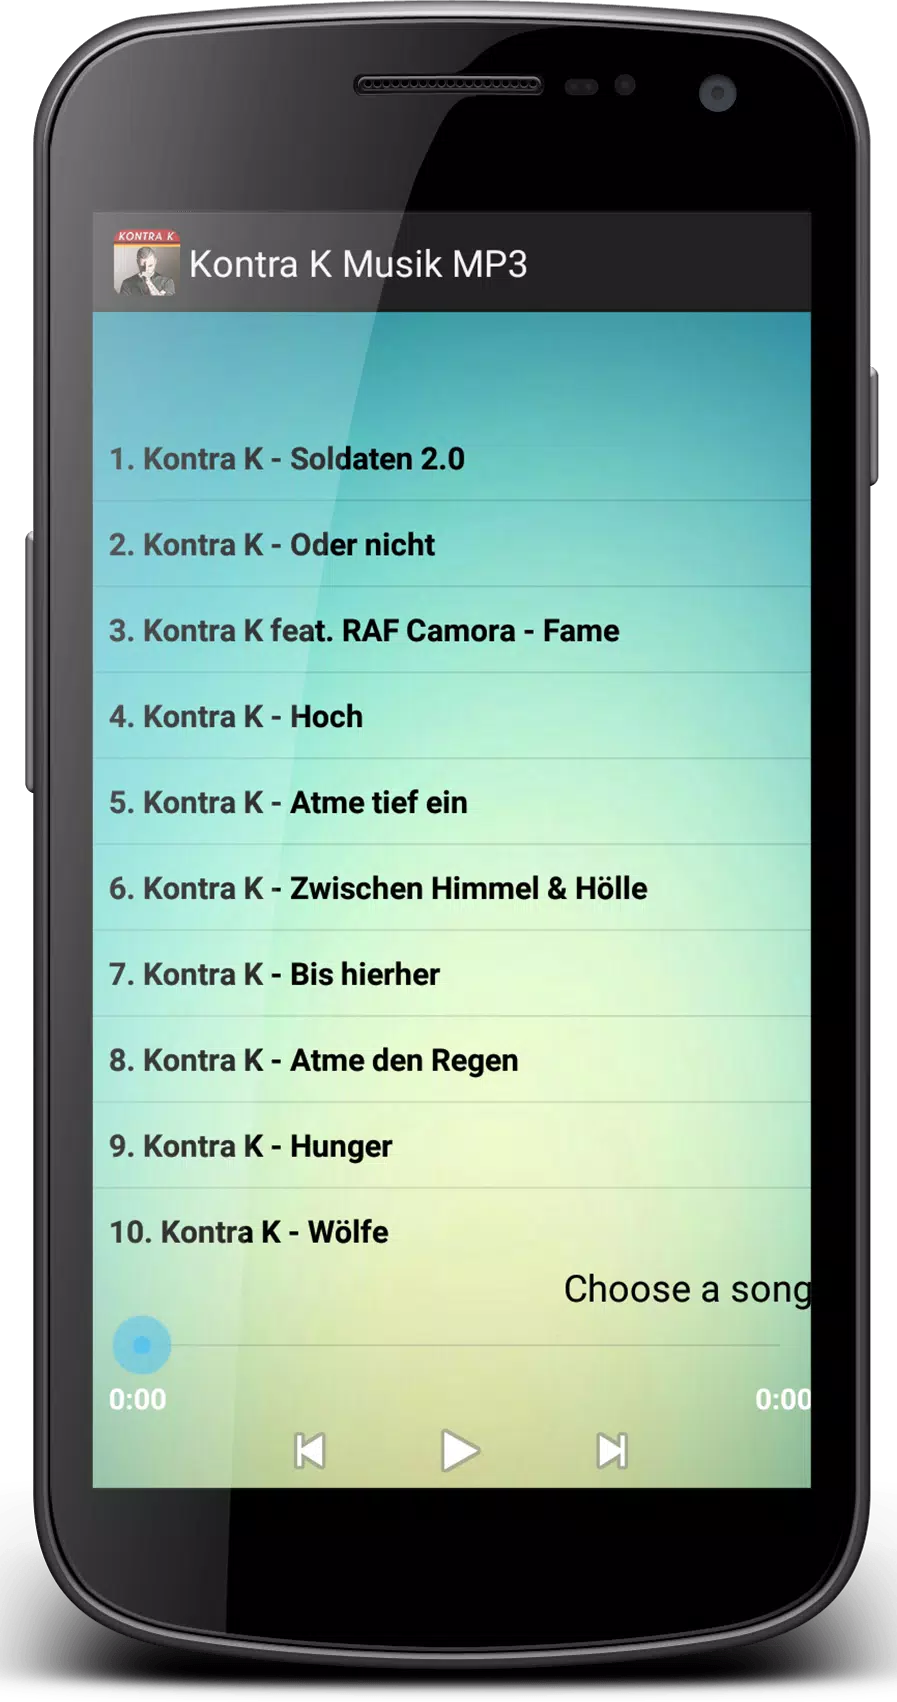 Kontra K Musik MP3 APK for Android Download